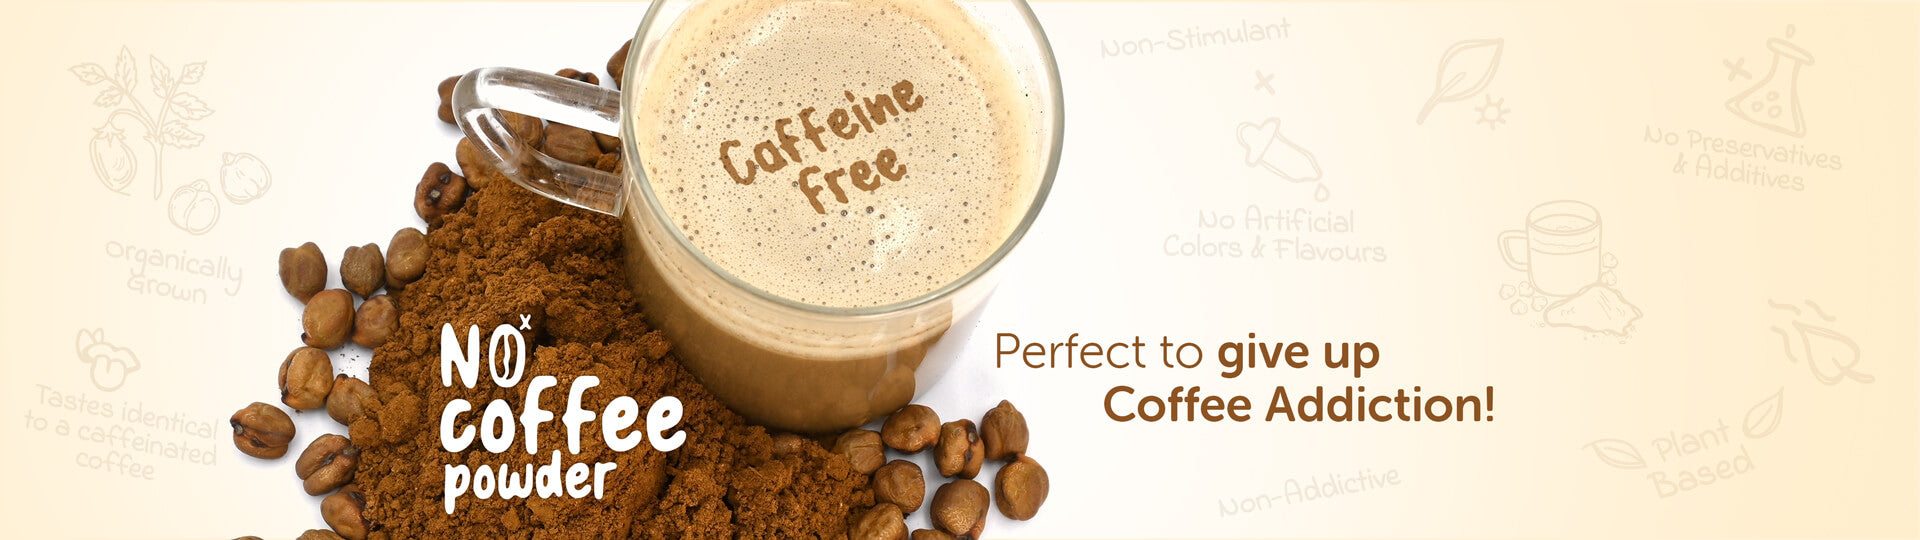 organic-caffeine-free-coffee-powder - Satopradhan